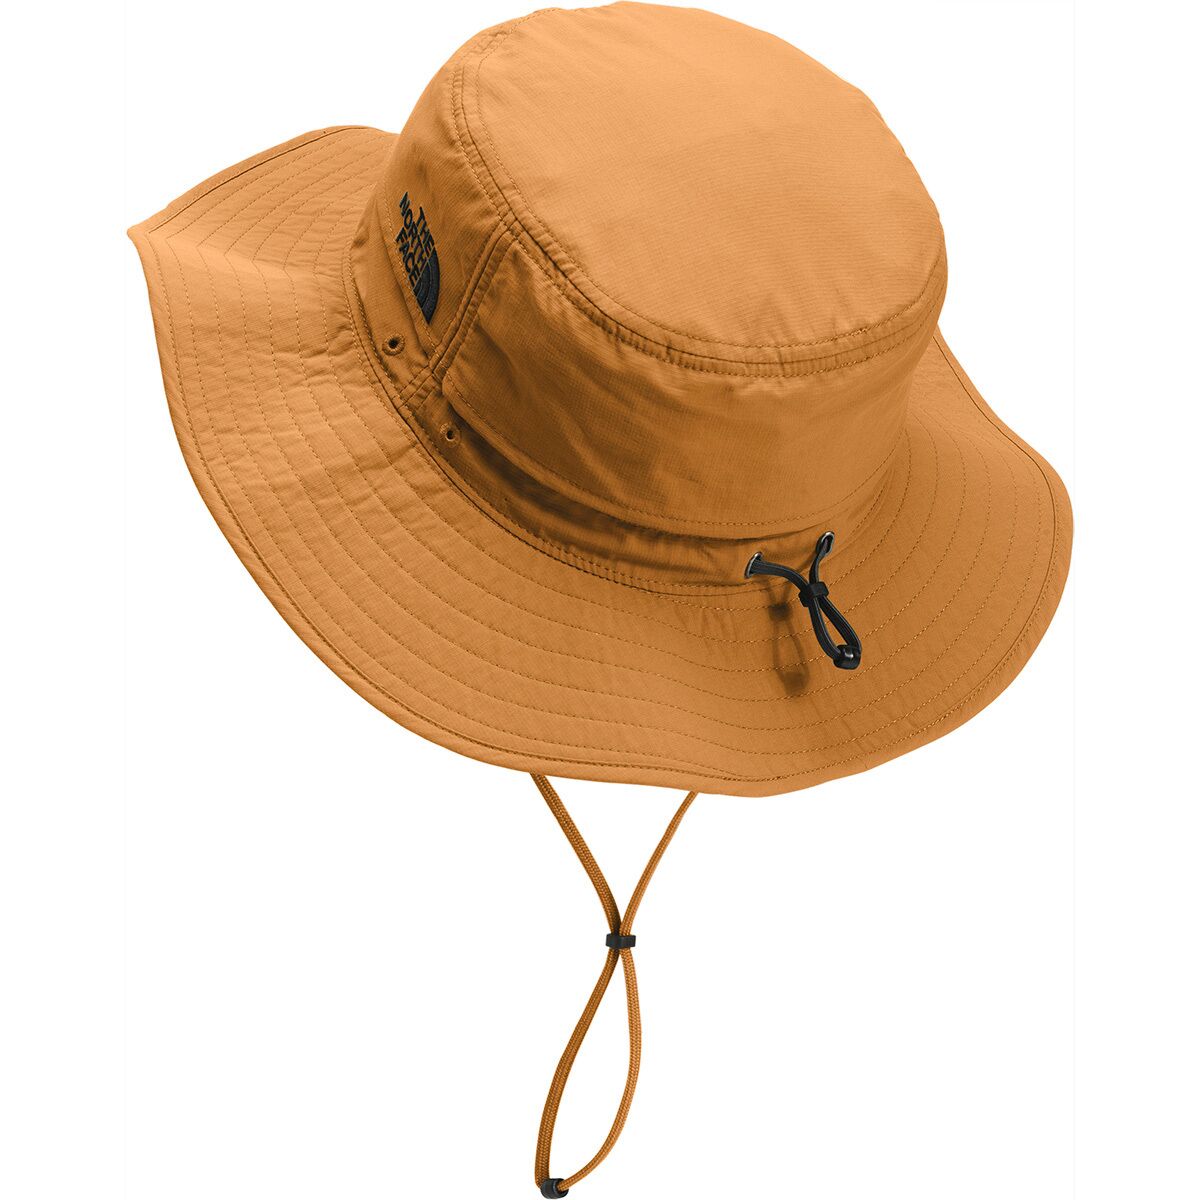 The North Face Horizon Breeze Brimmer Hat - Men